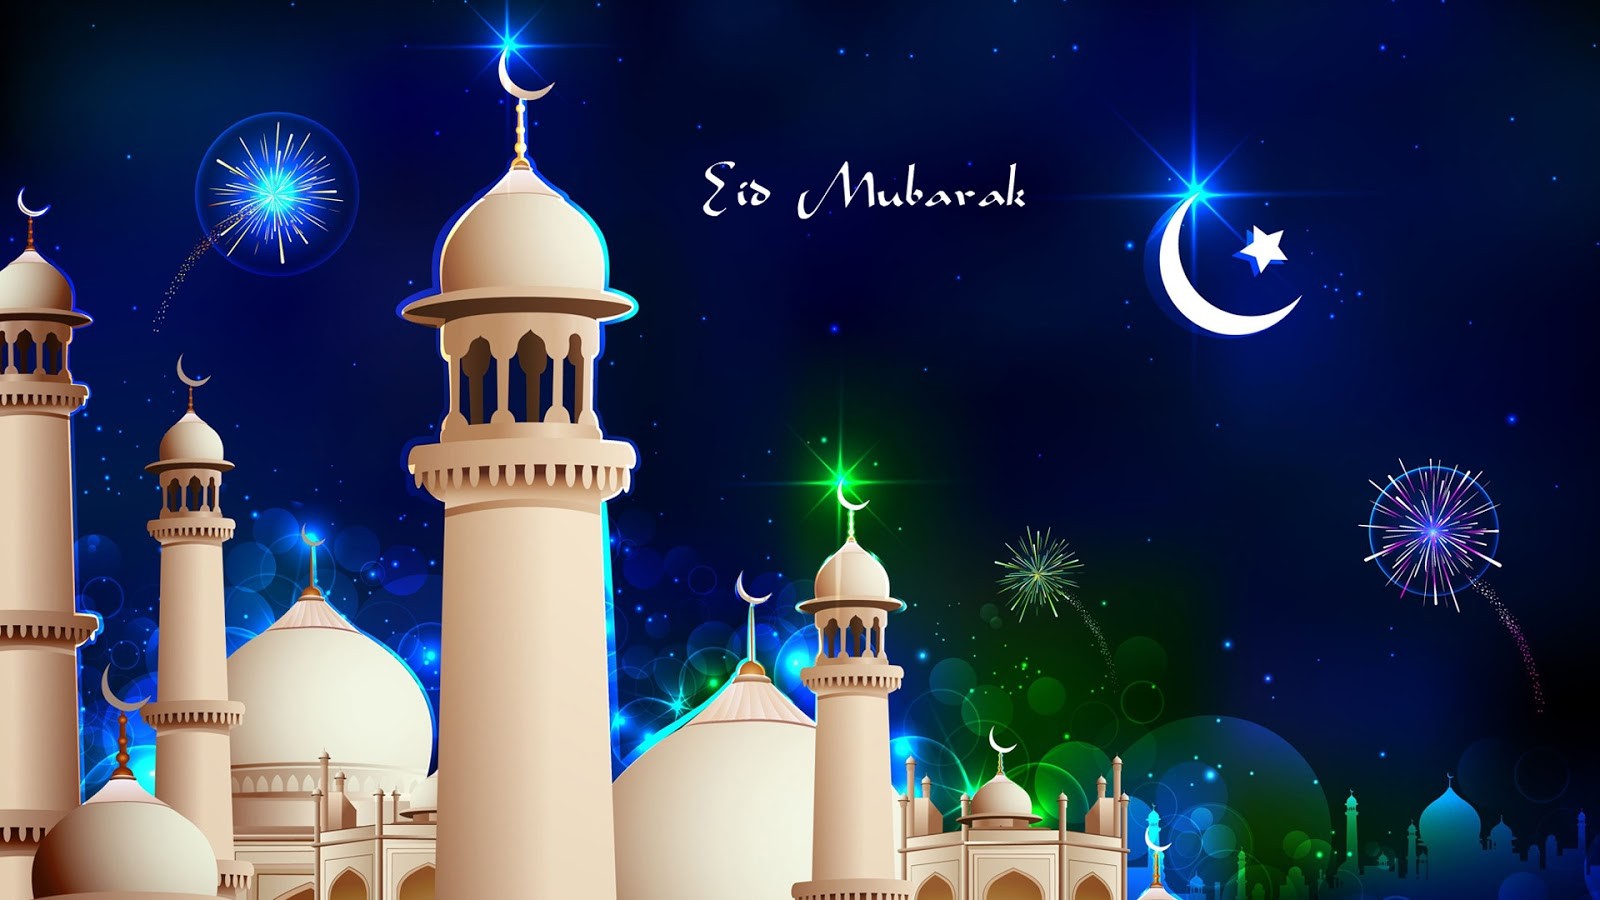 30 High-Quality Eid Mubarak HD Images, Pictures ..., ramadan 2019 hd wallpaper download